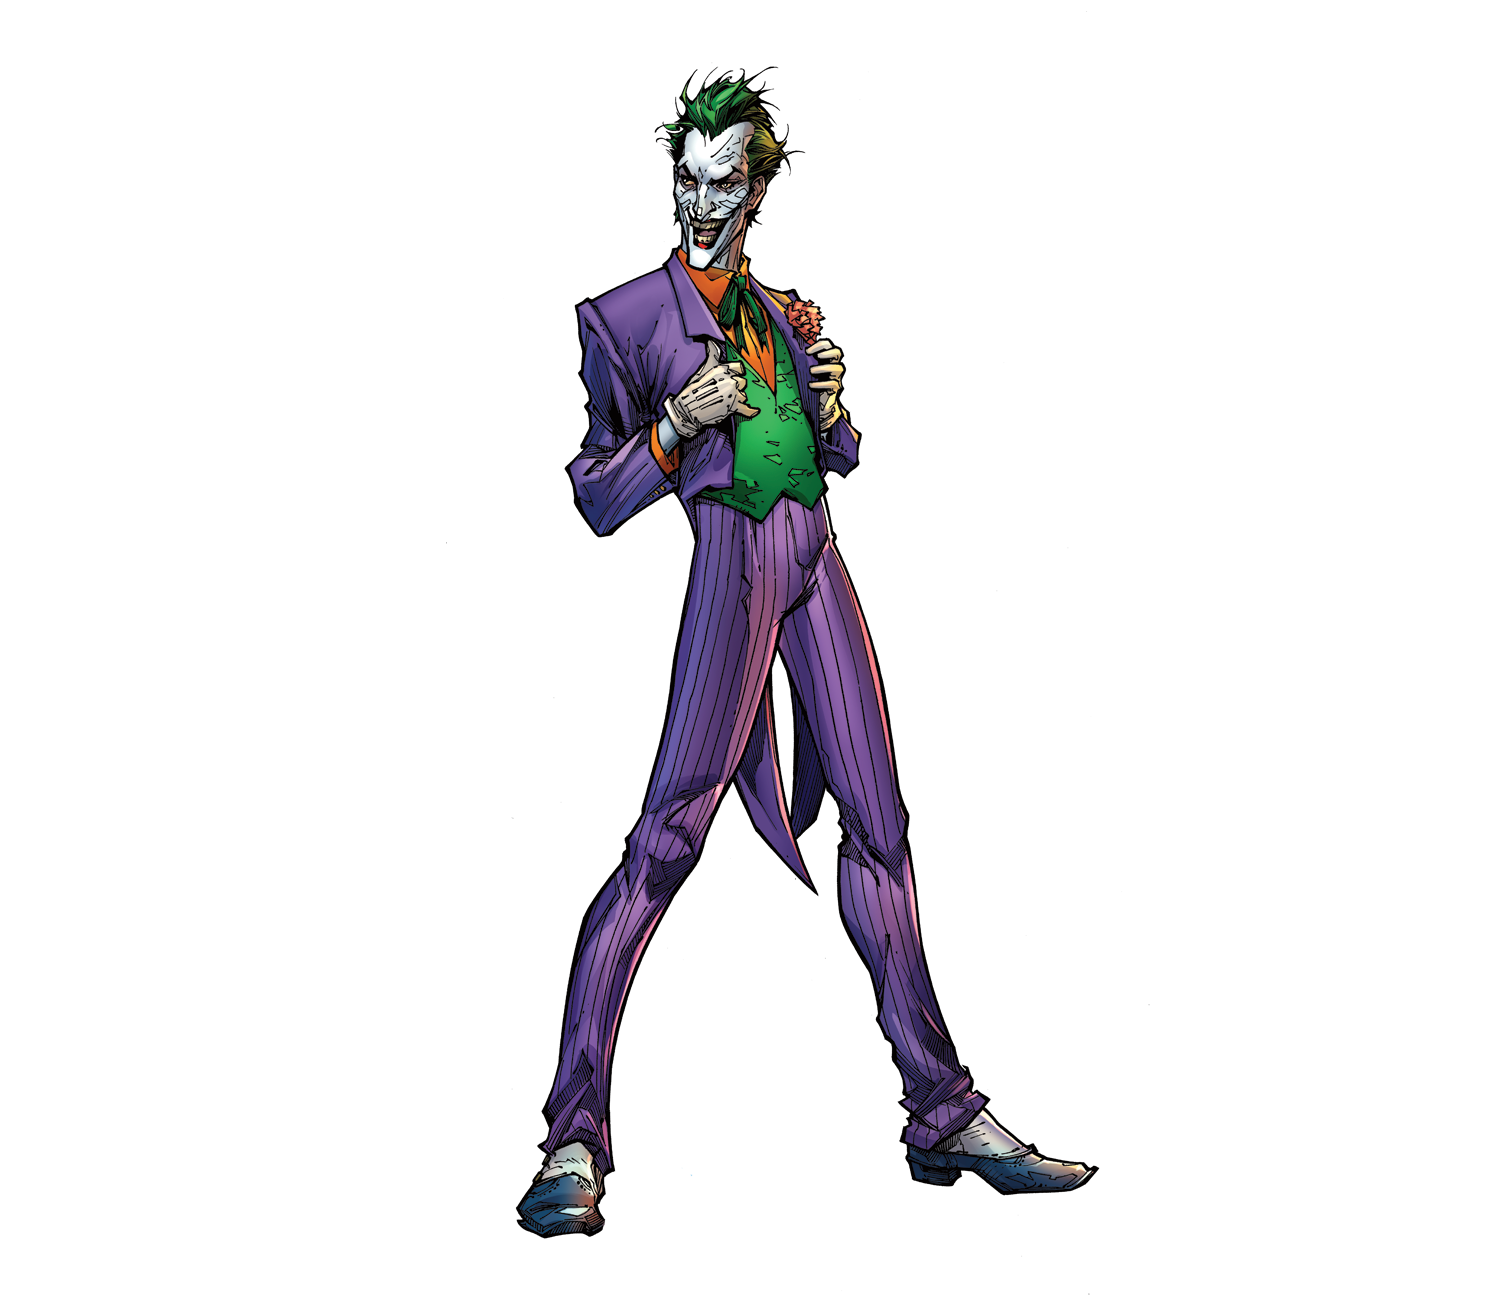 Joker Batman Two-Face The Dar